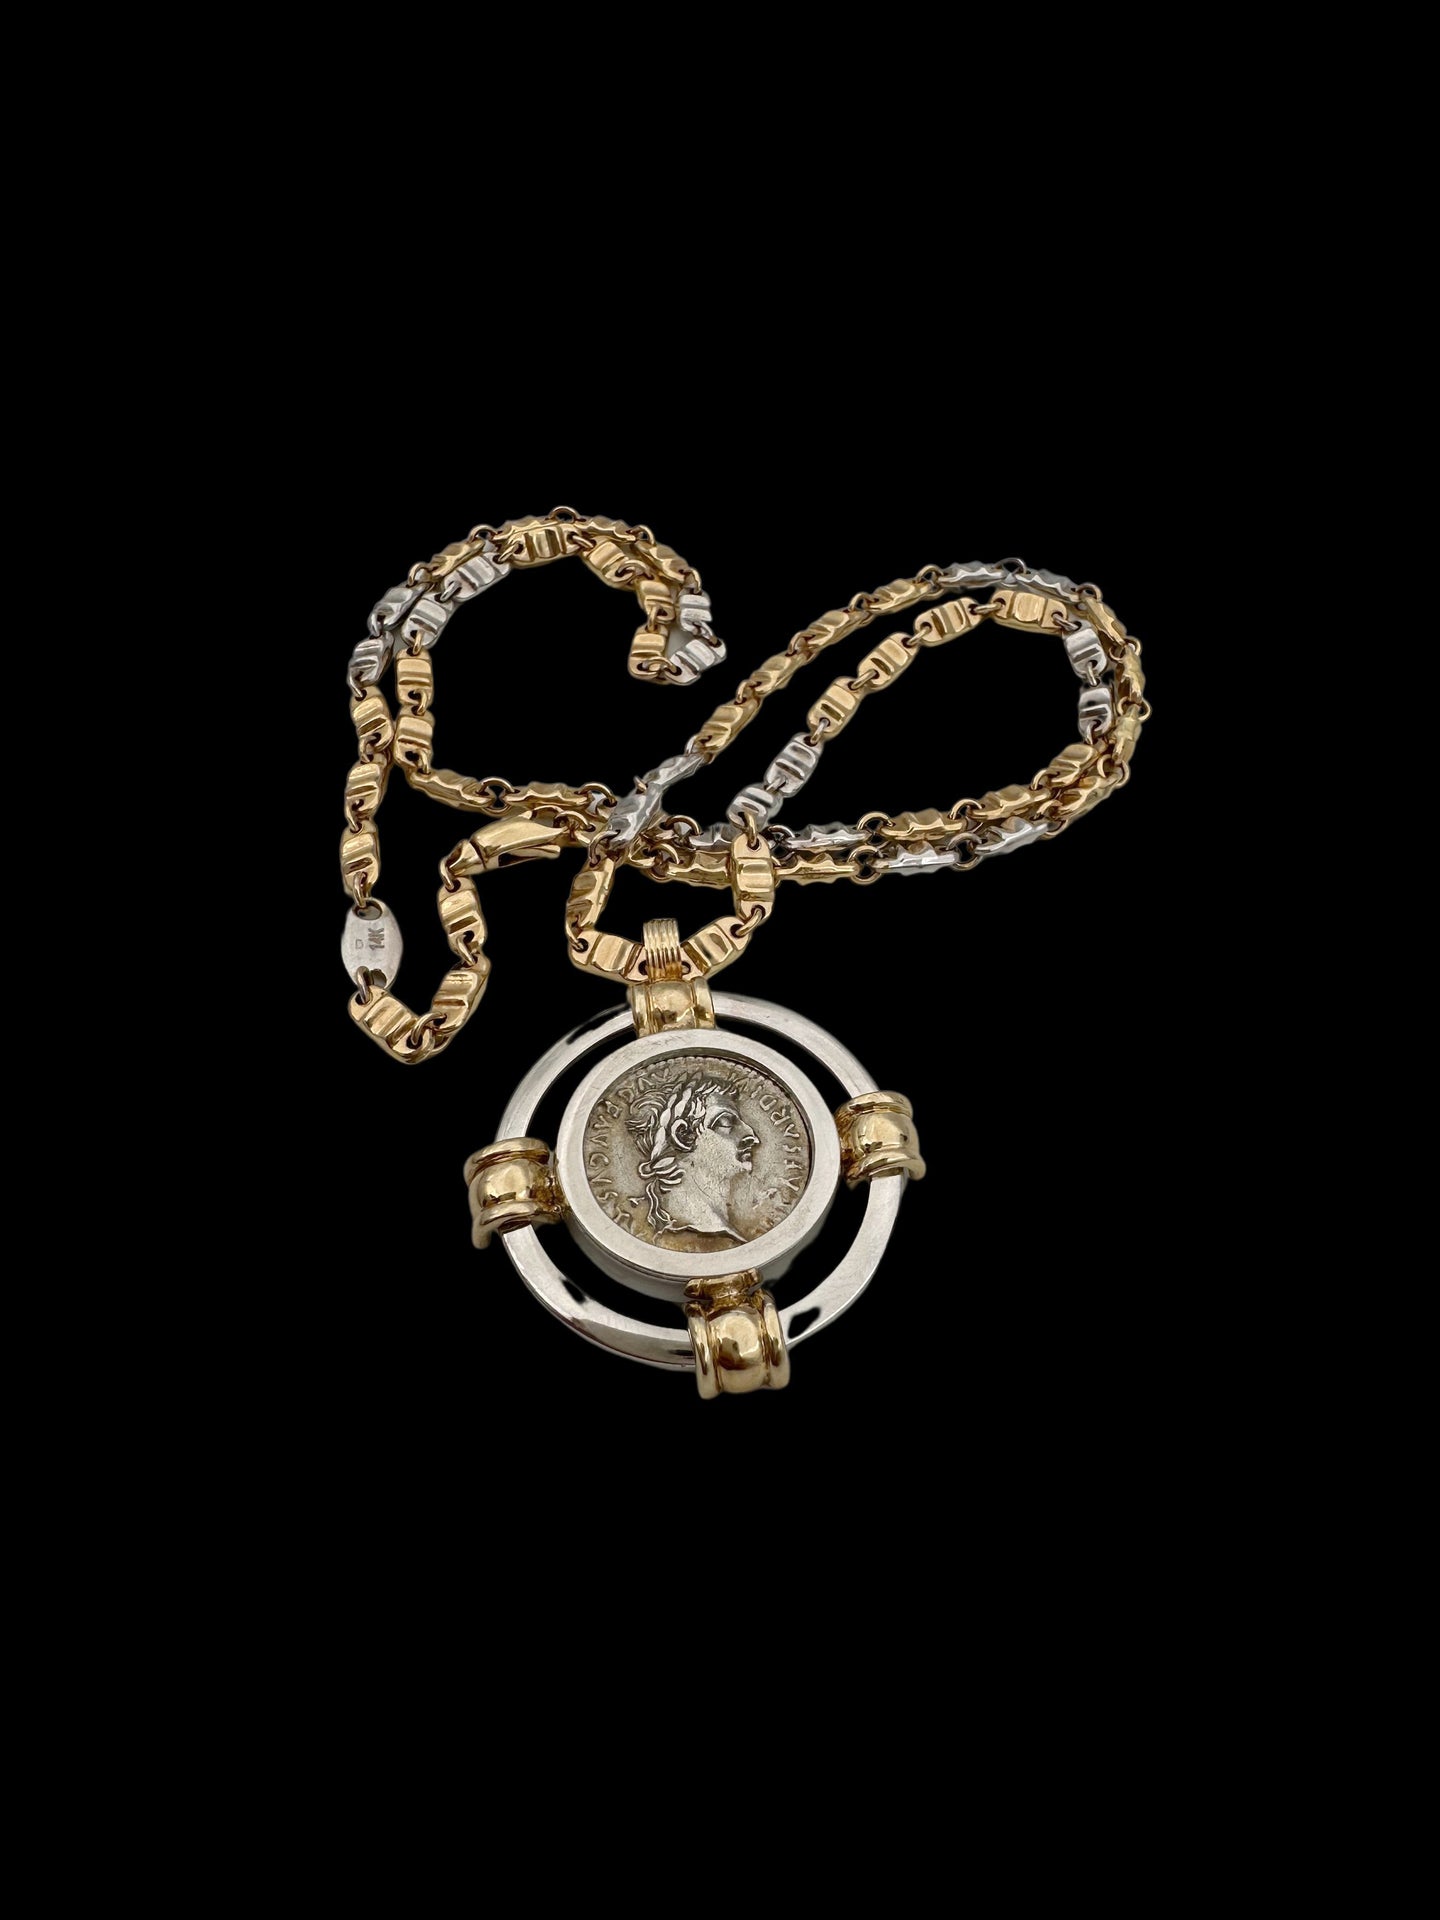 Ancient Silver Denarius Tribute Penny “Render To Caesar” Coin Set in 14K Gold Pendant